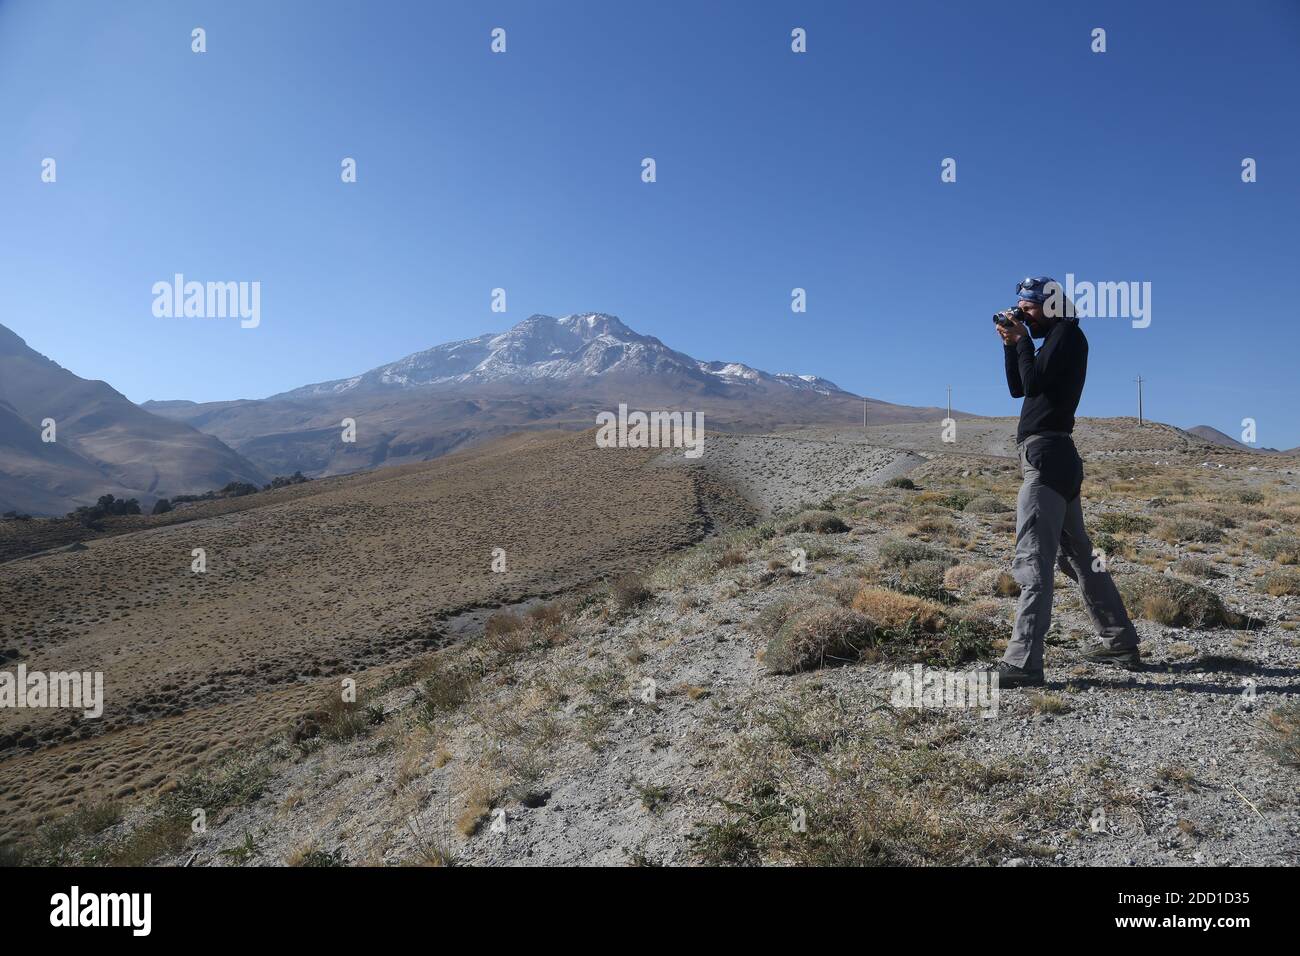 MOUNT SAVALAN, IRAN - SEPTEMBER 27: A photographer take a shot in Mount Savalan (Sabalan) on September 27, 2017 in Savalan, Iran. Savalan is the third highest mountain in Iran. Stock Photo